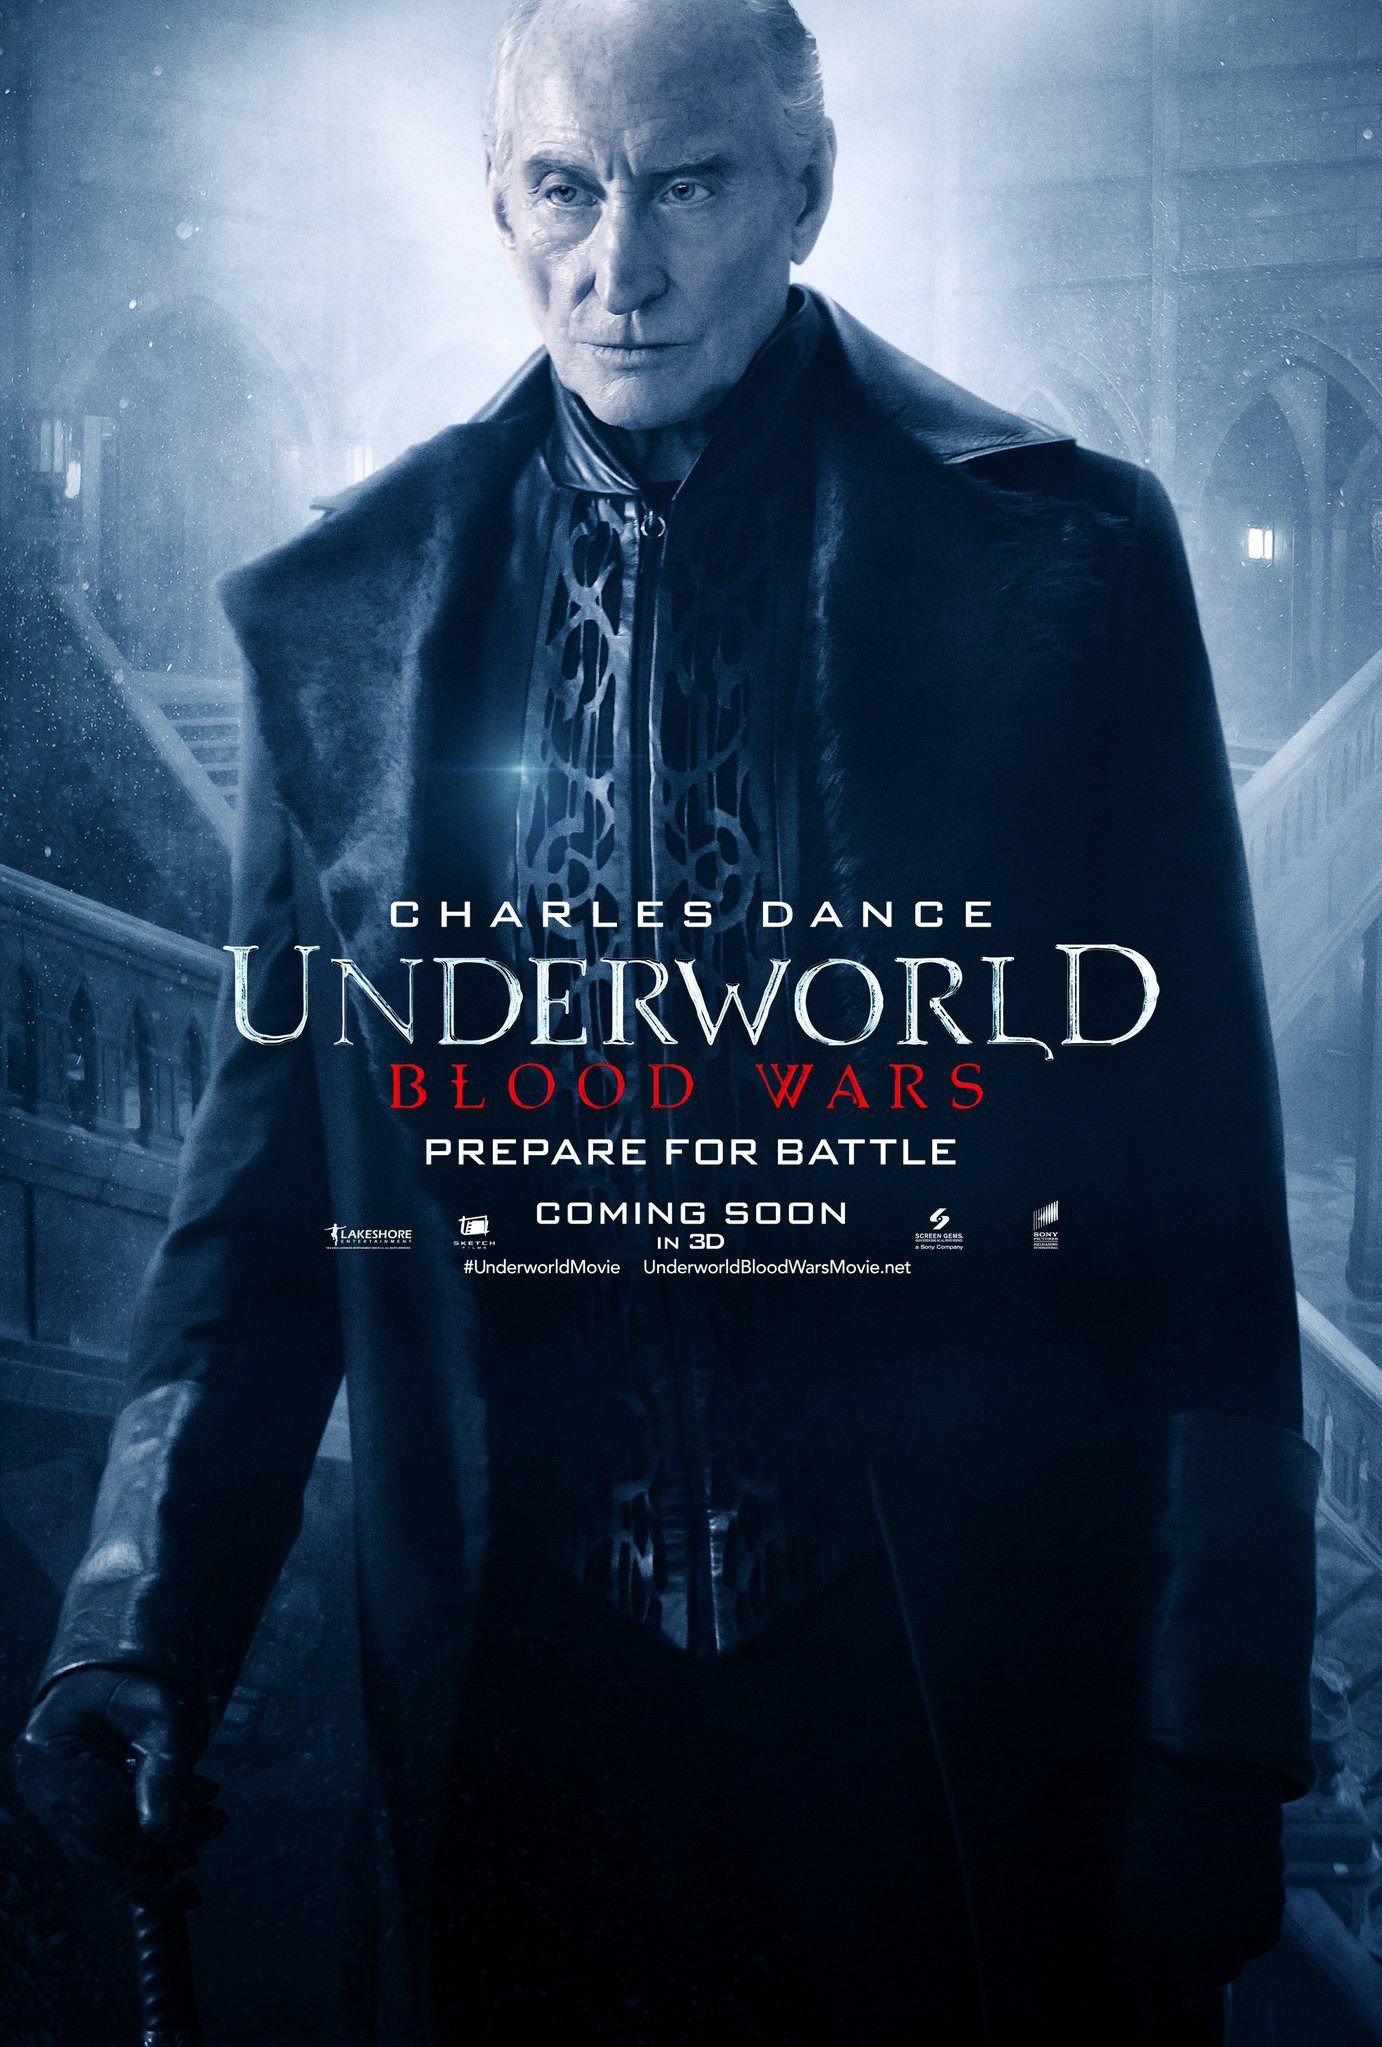 Underworld 5 New Trailer: Kate Beckinsale Gets More Powers